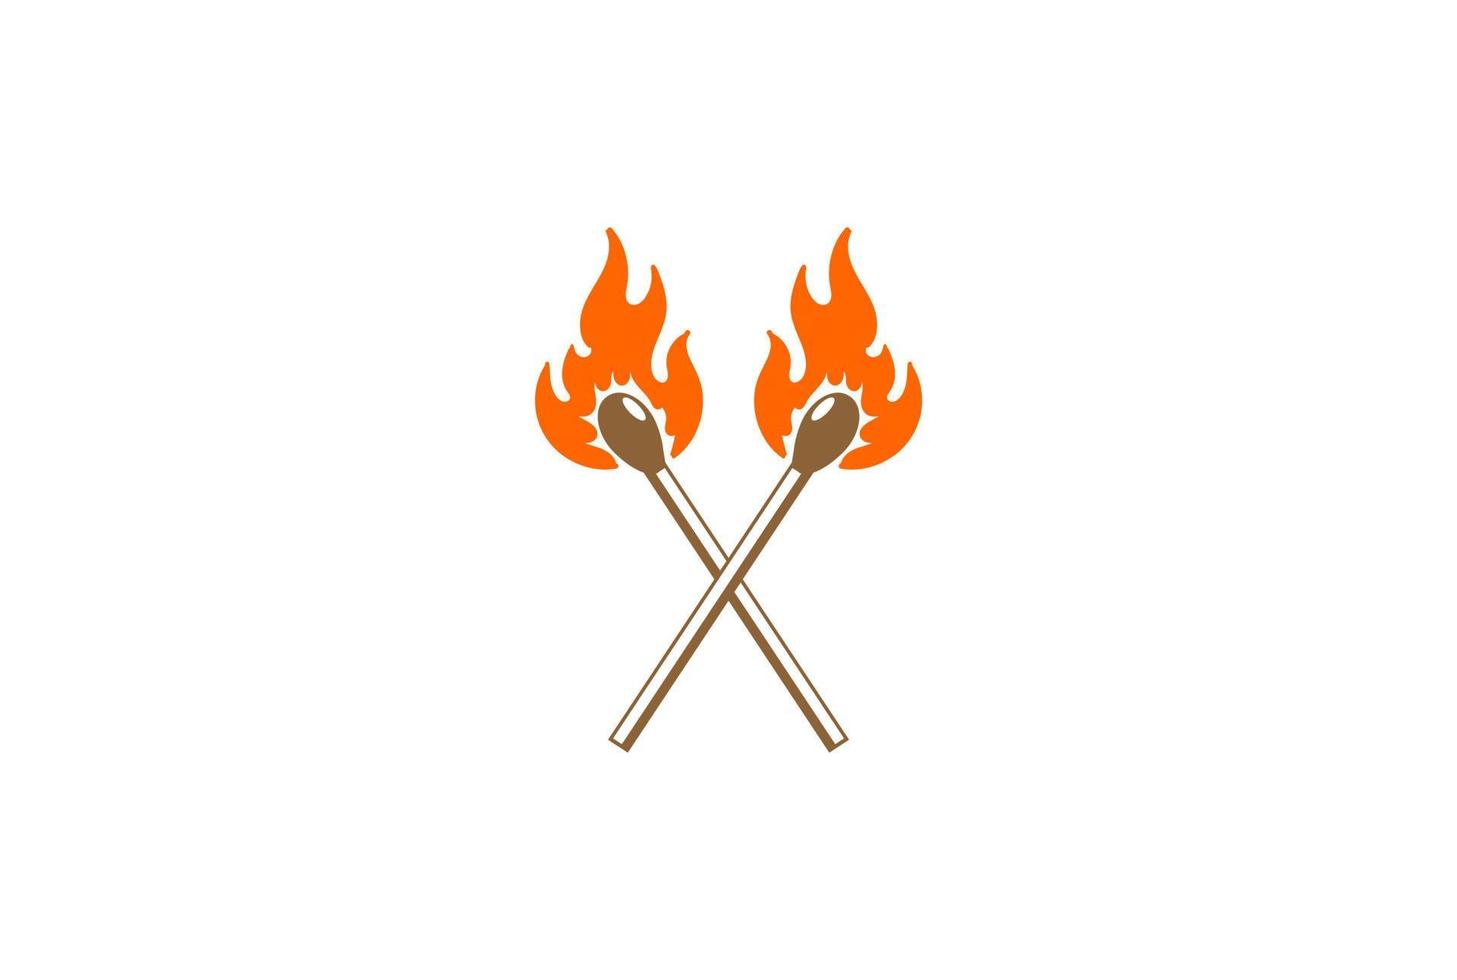 Vintage Retro Crossed Wooden Fire Flame Match Logo Design vector